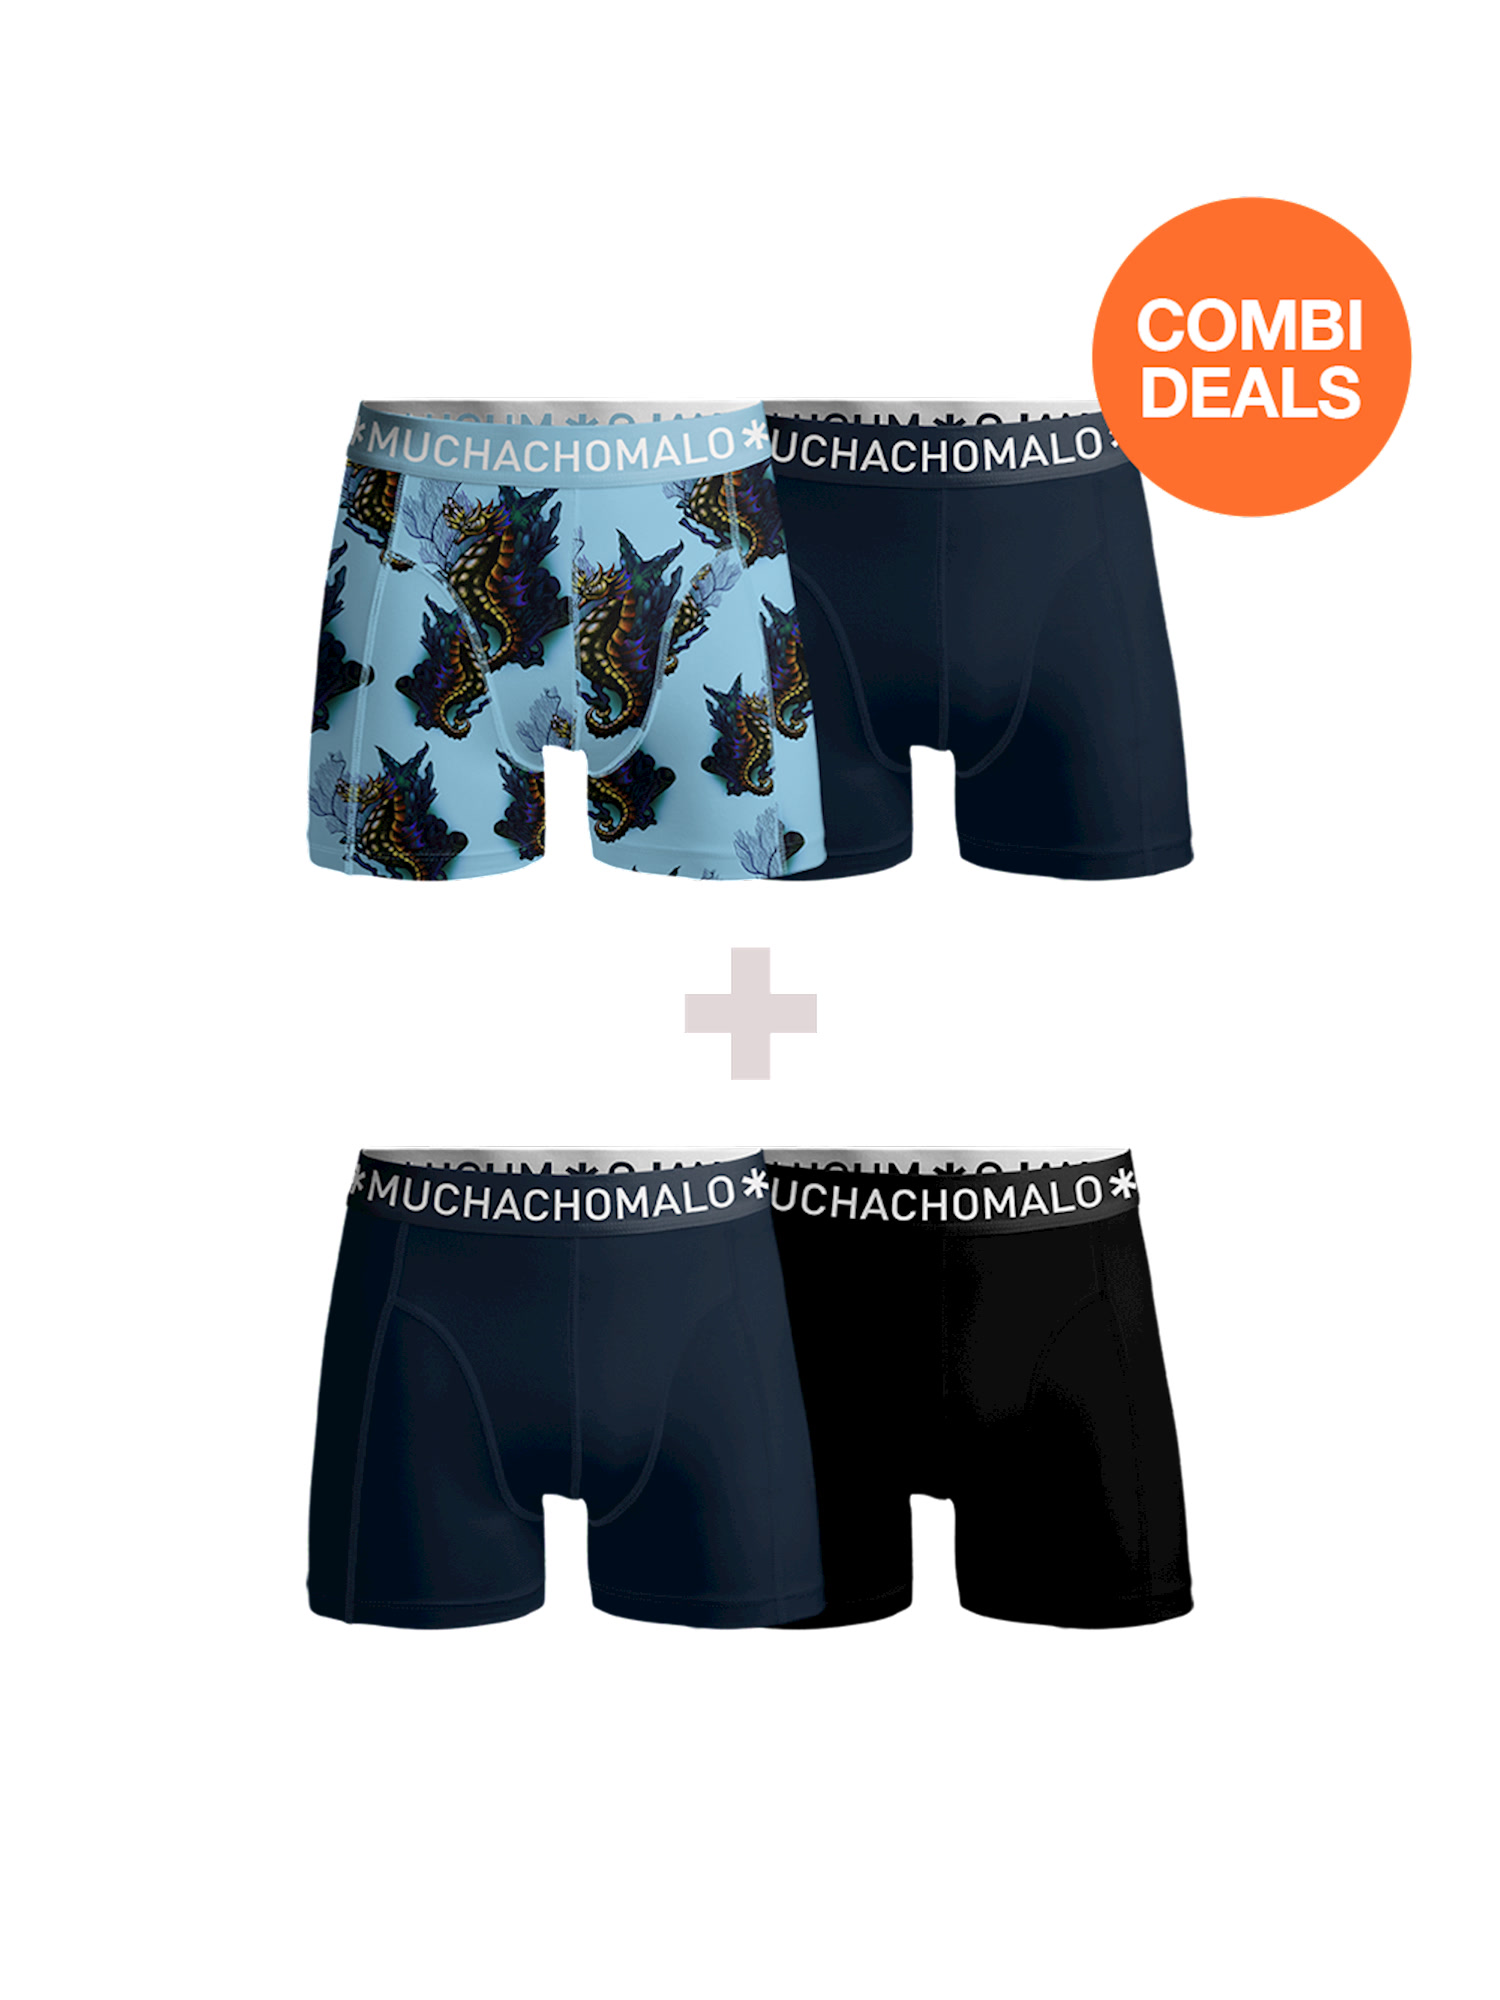 Боксеры Muchachomalo 2er-Set: Boxershorts, цвет Multicolor/Blue/Black/Blue боксеры muchachomalo 2er set boxershorts цвет black black blue blue